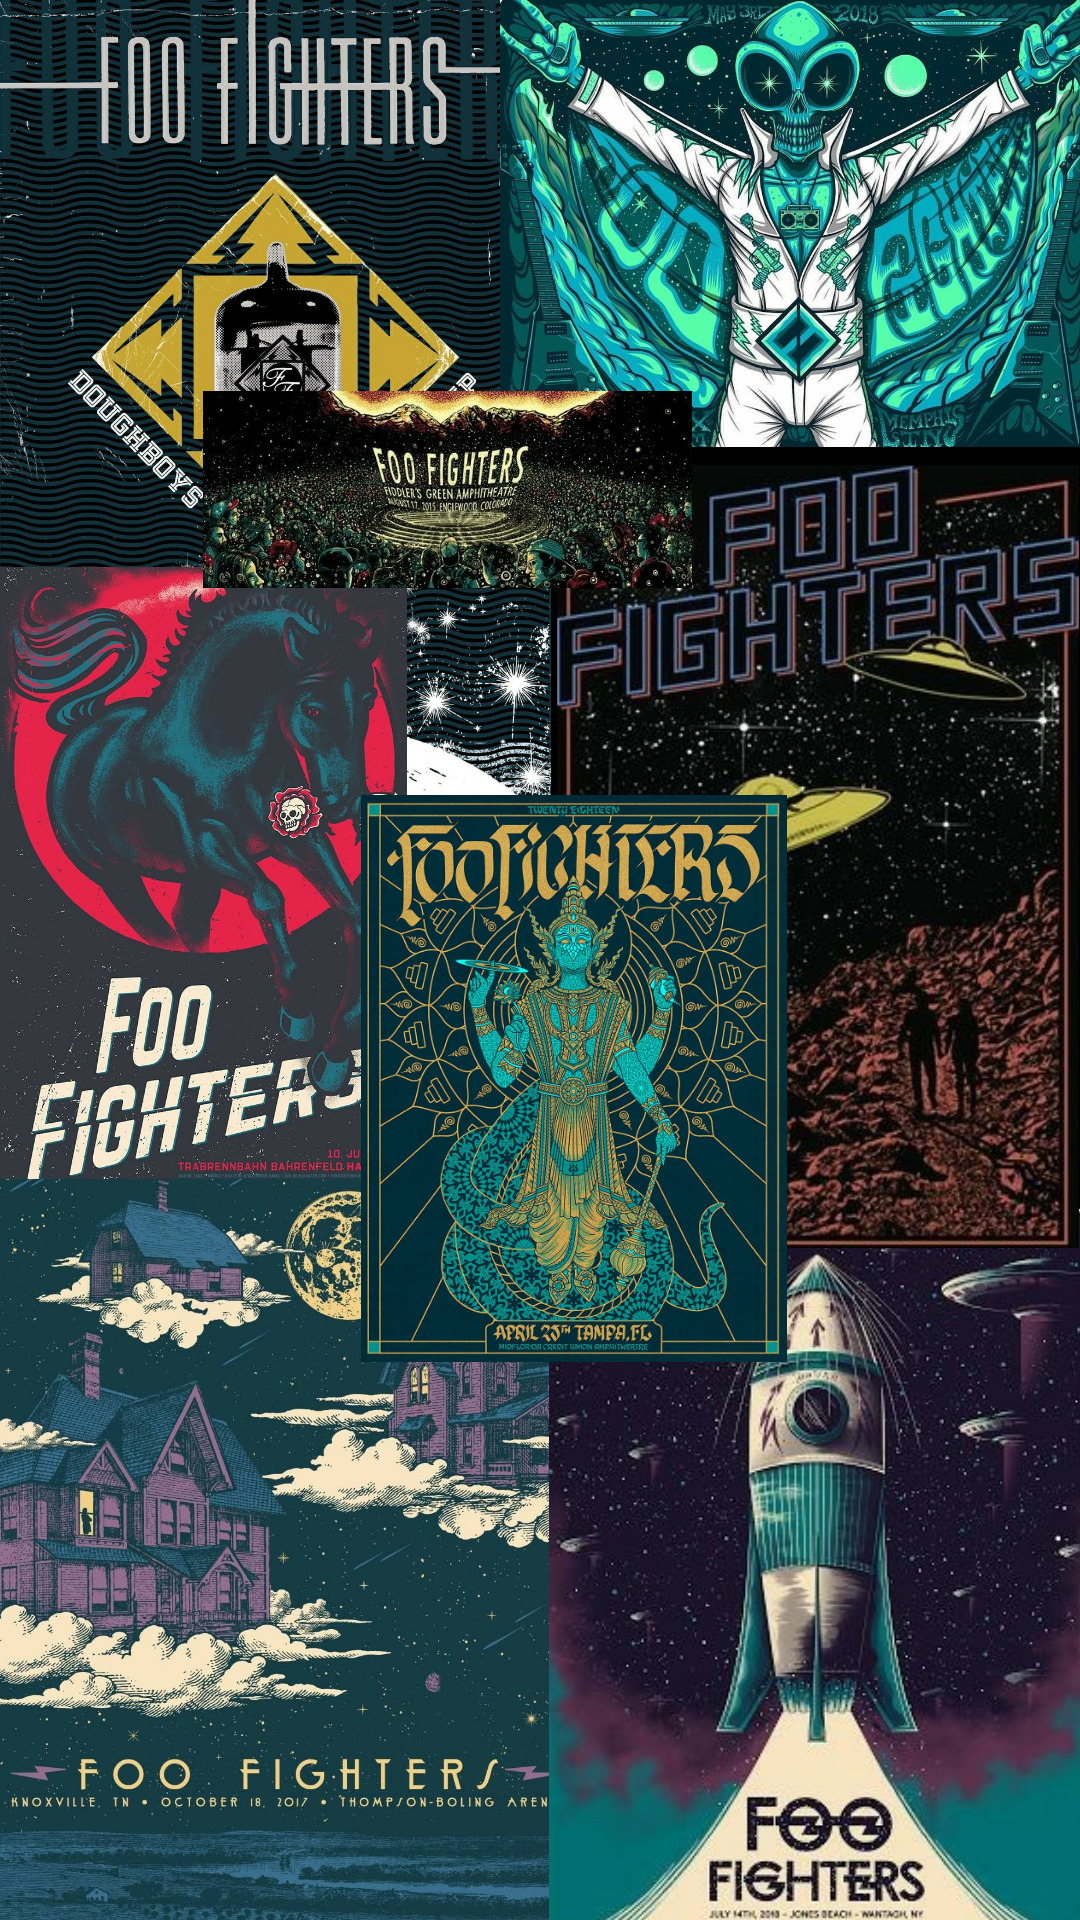 Foo Fighters Wallpapers